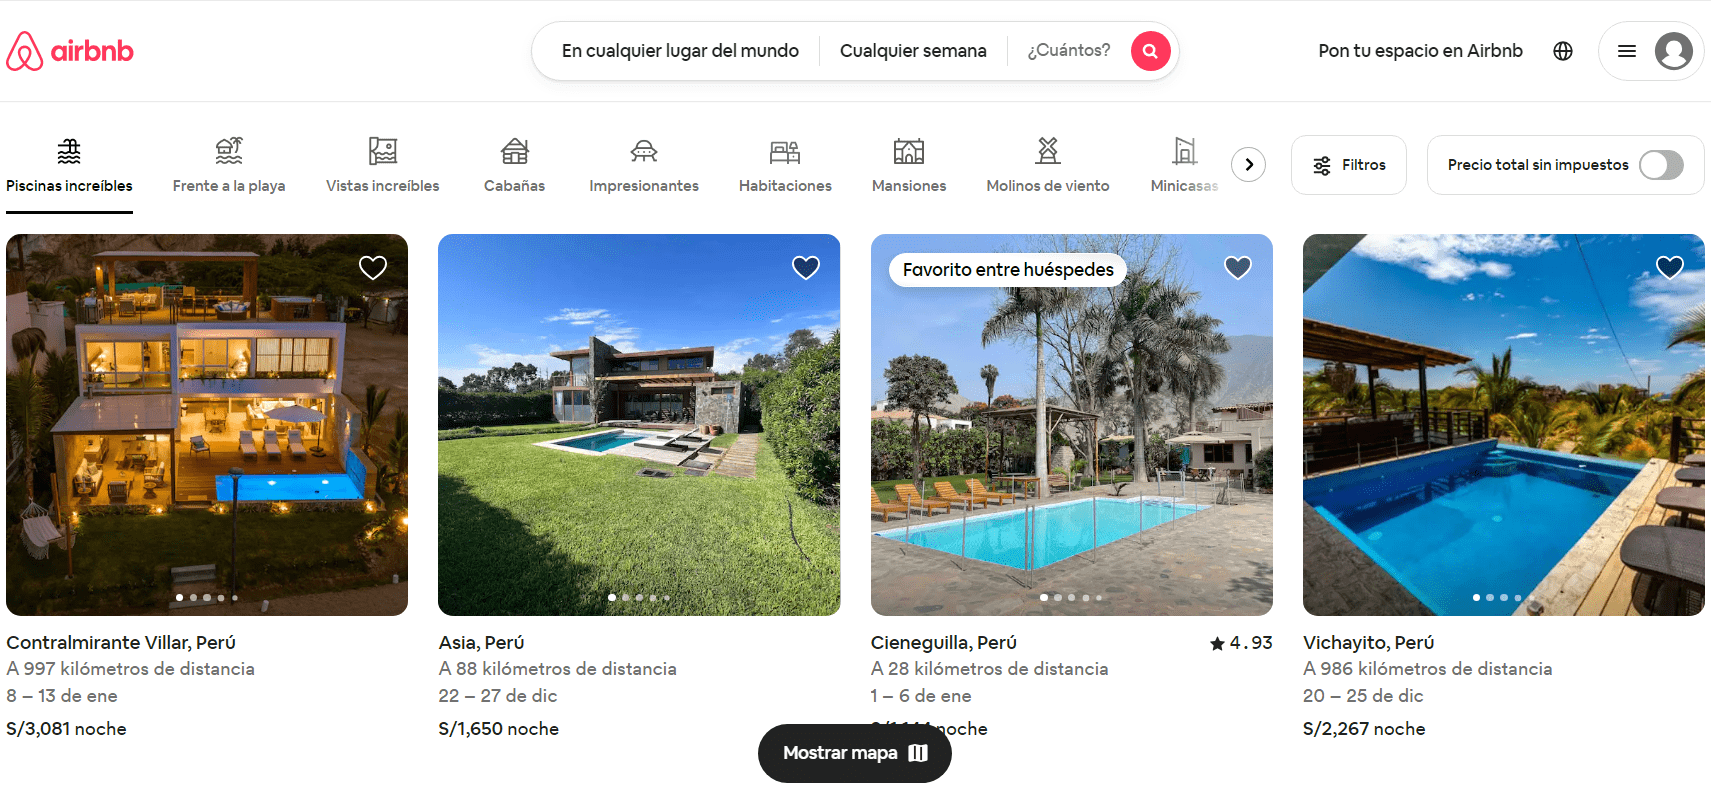 airbnb web